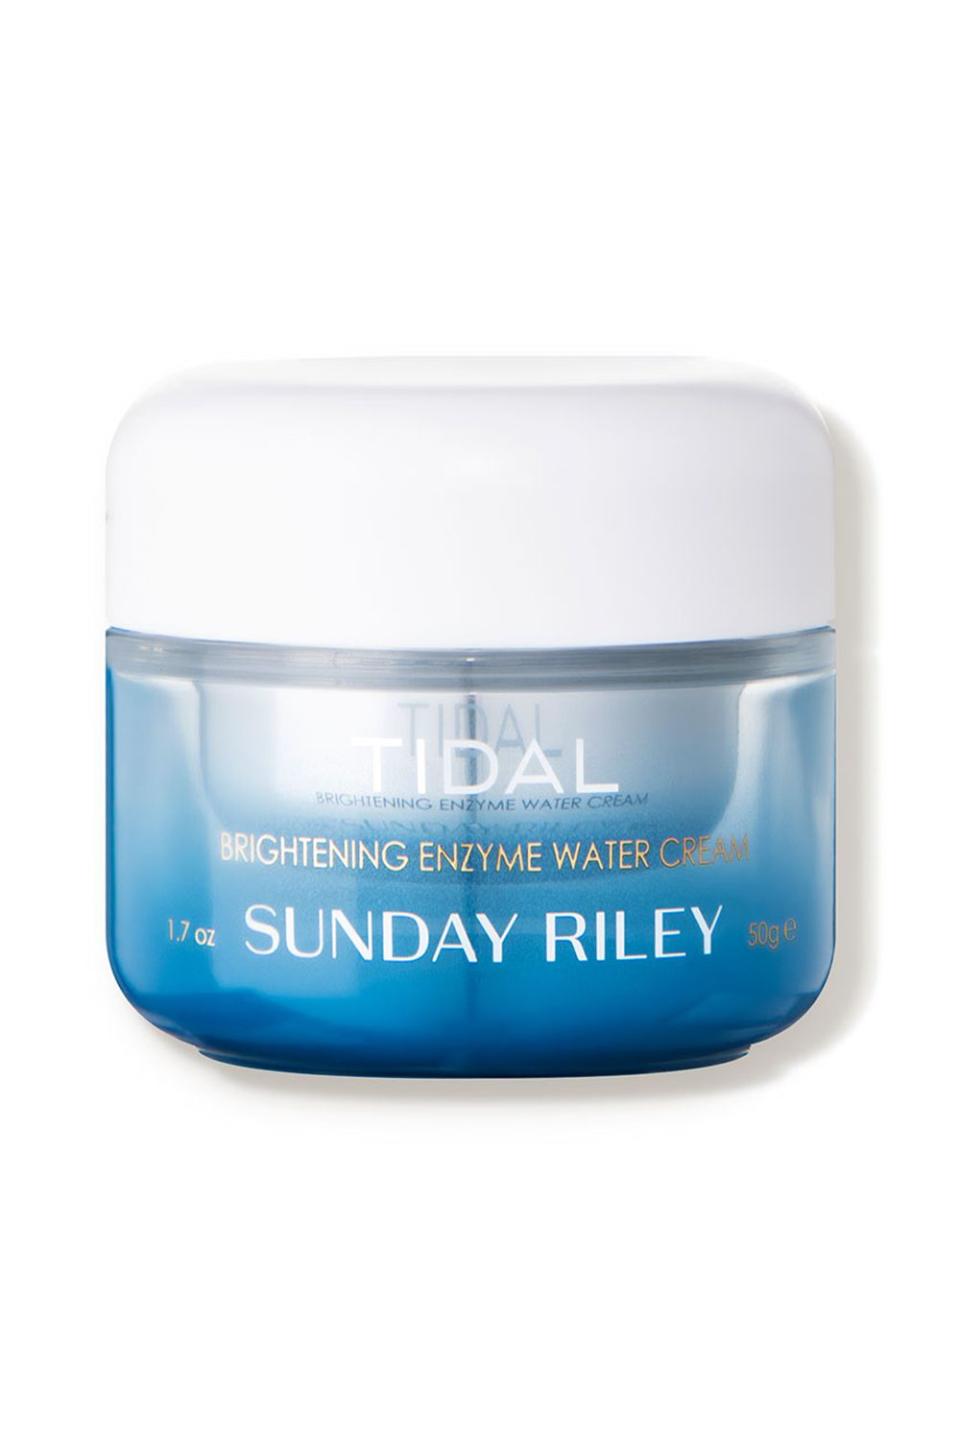 4) Sunday Riley Tidal Brightening Enzyme Water Cream